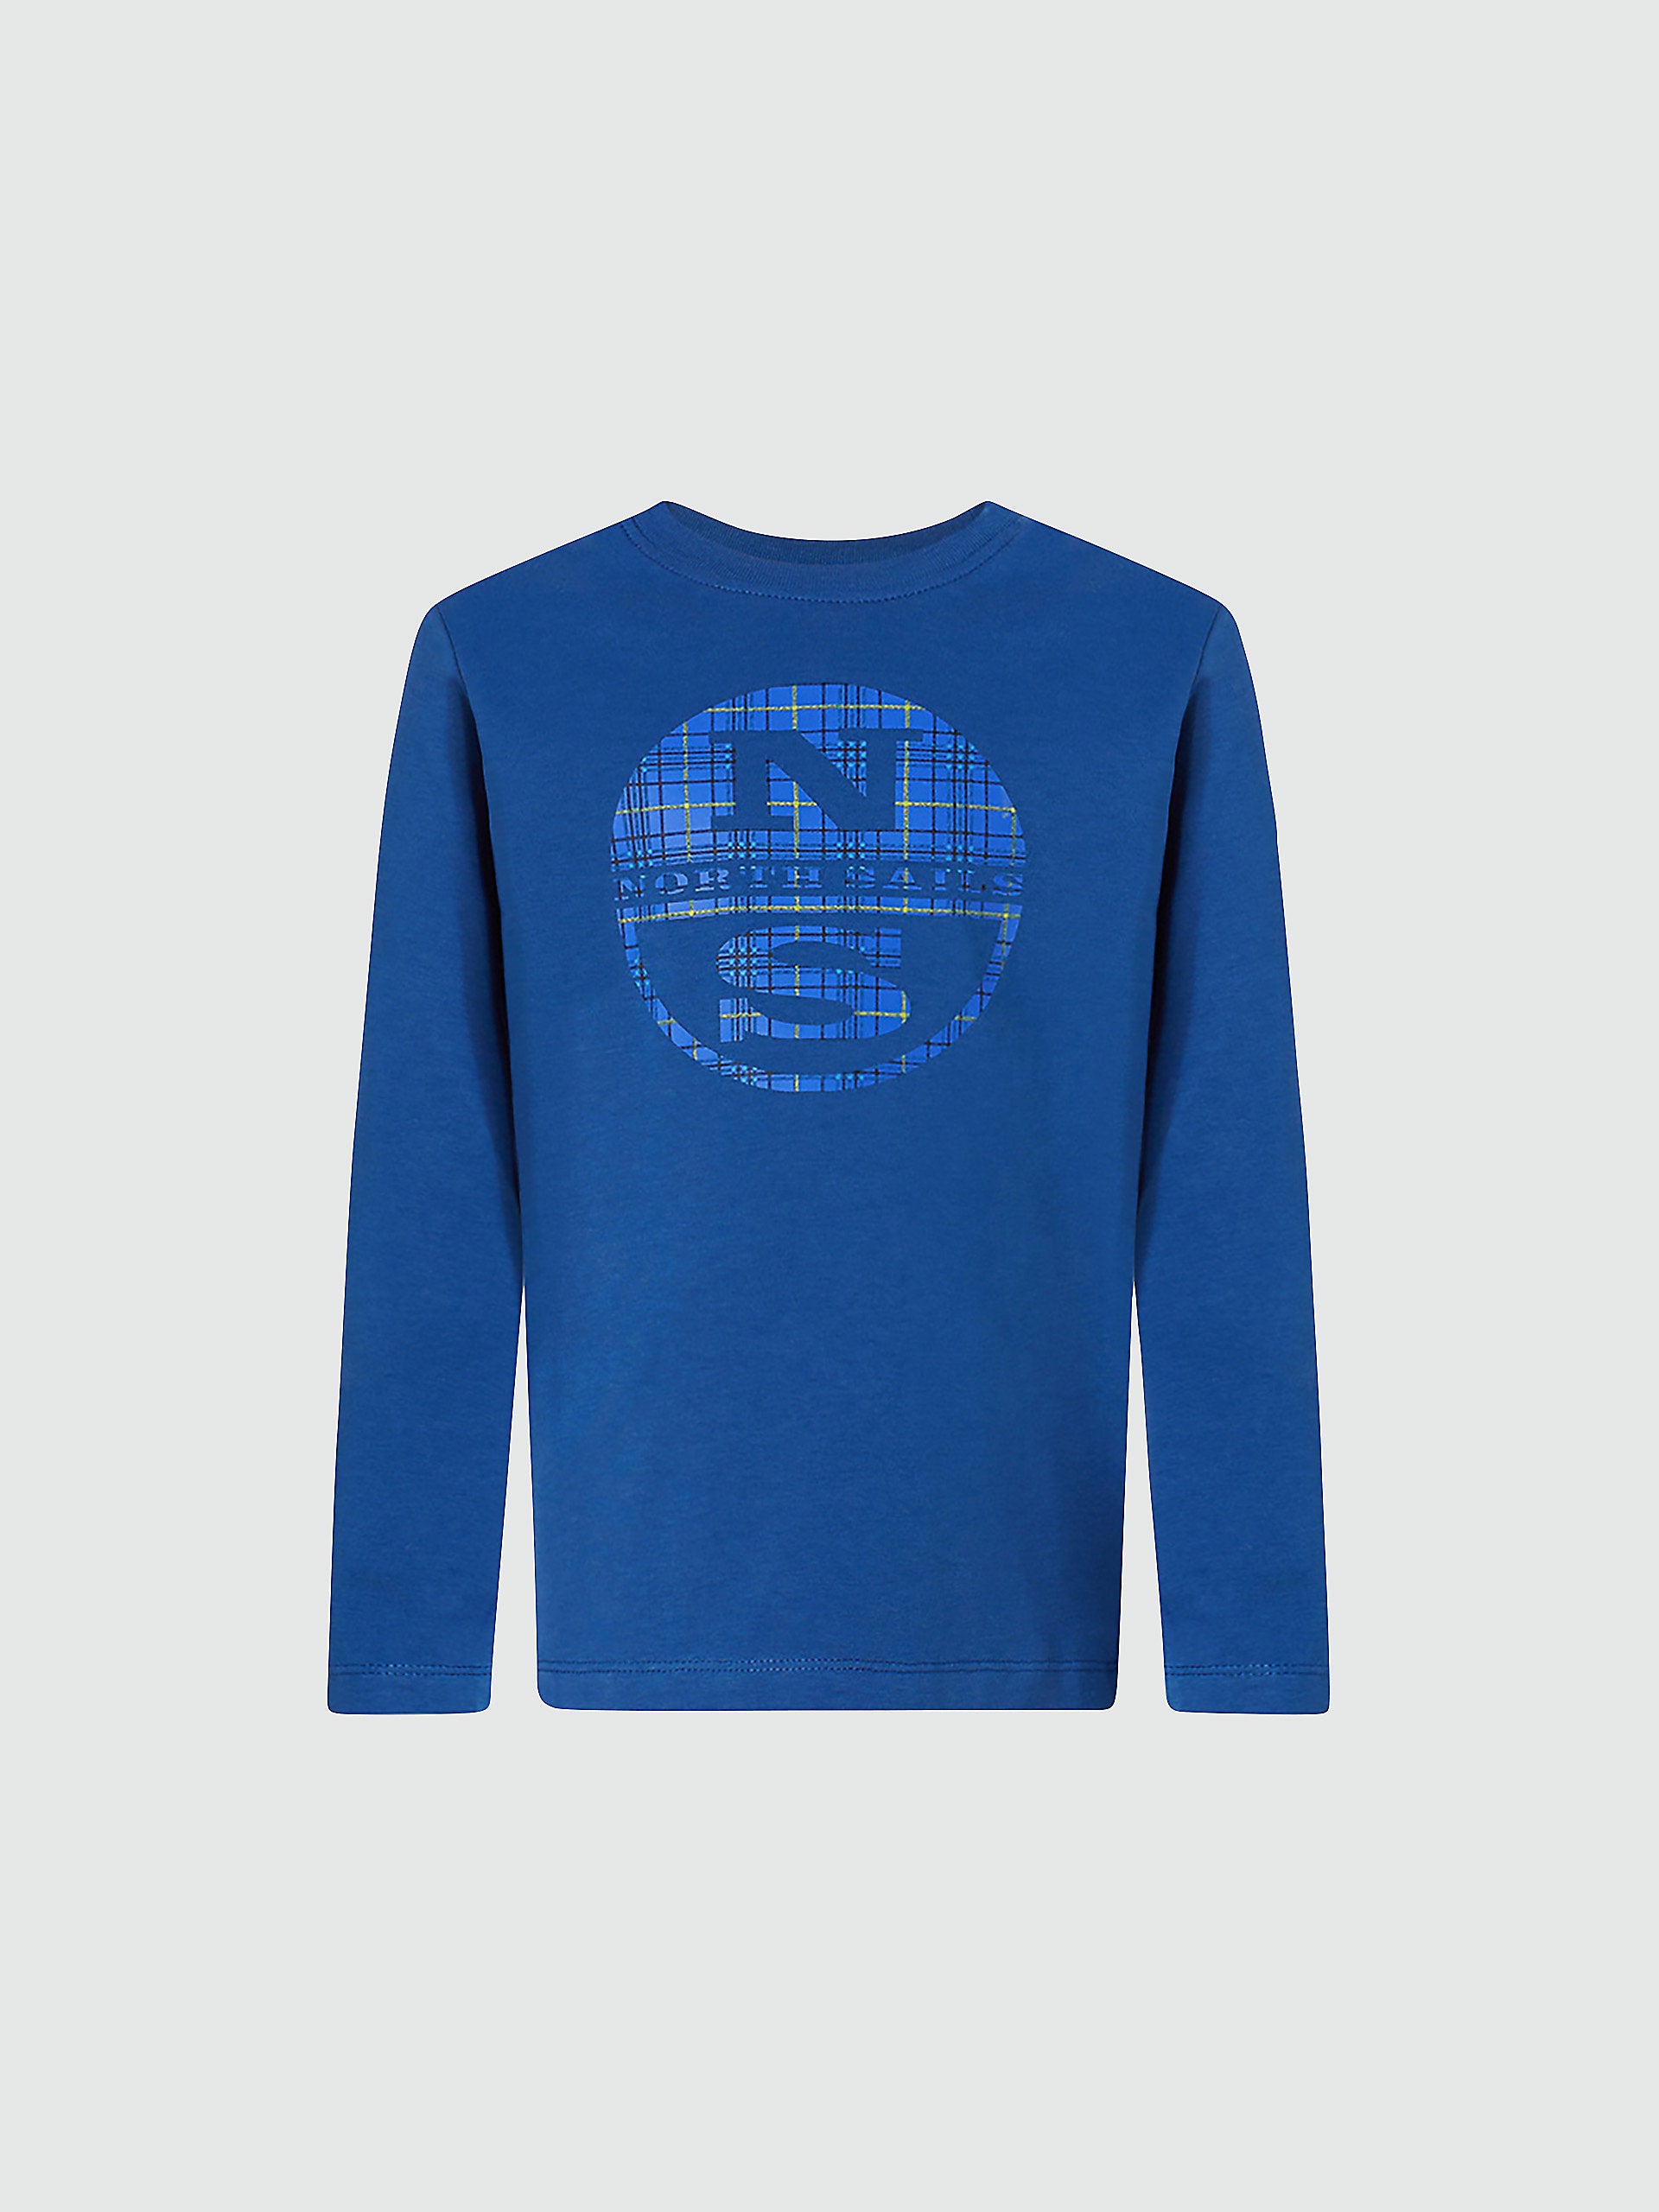 North Sails - T-shirt with maxi logoNorth SailsOcean blue6